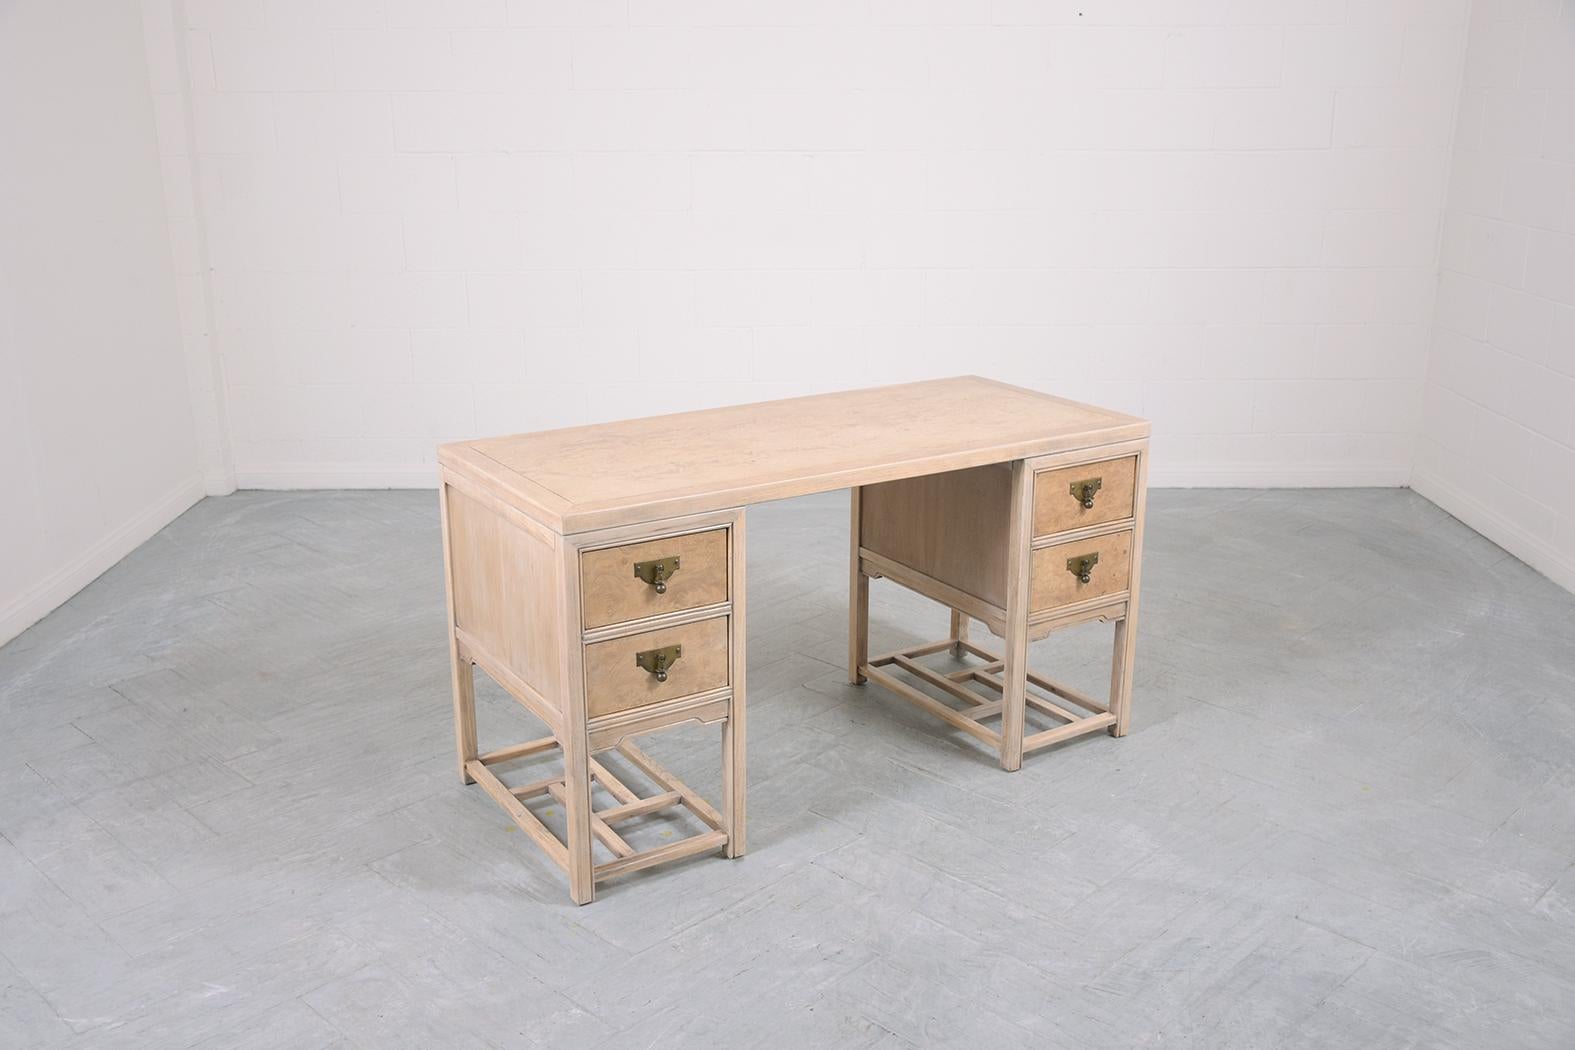 Carved 1960s Chinese Partners Desk: Walnut Craftsmanship with Modern White-Wash Finish